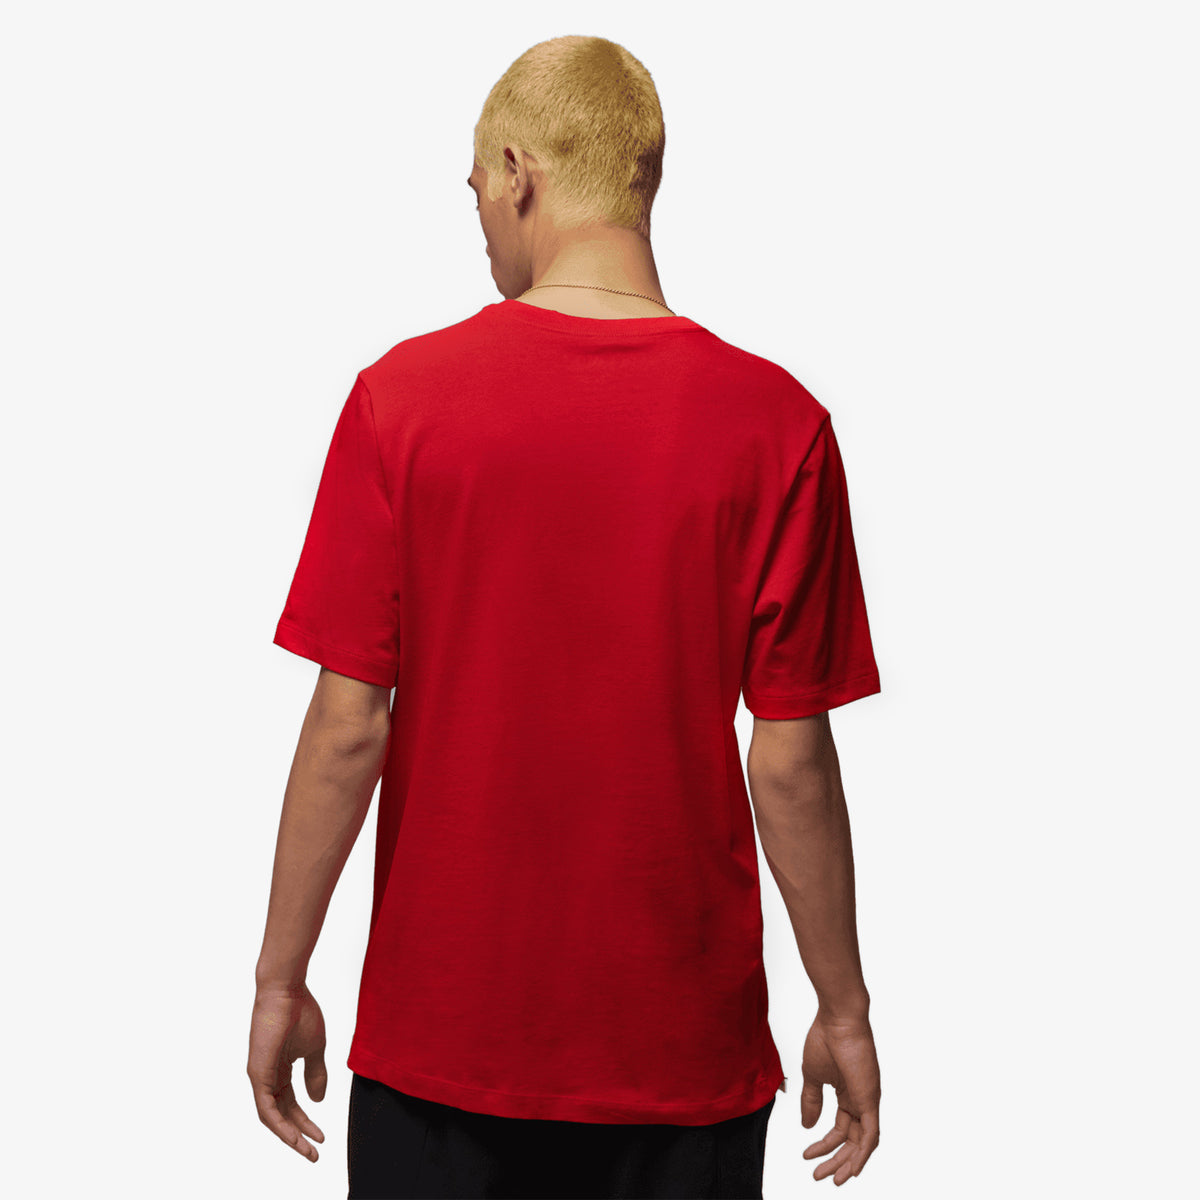 Jordan X Zion T-Shirt - Red